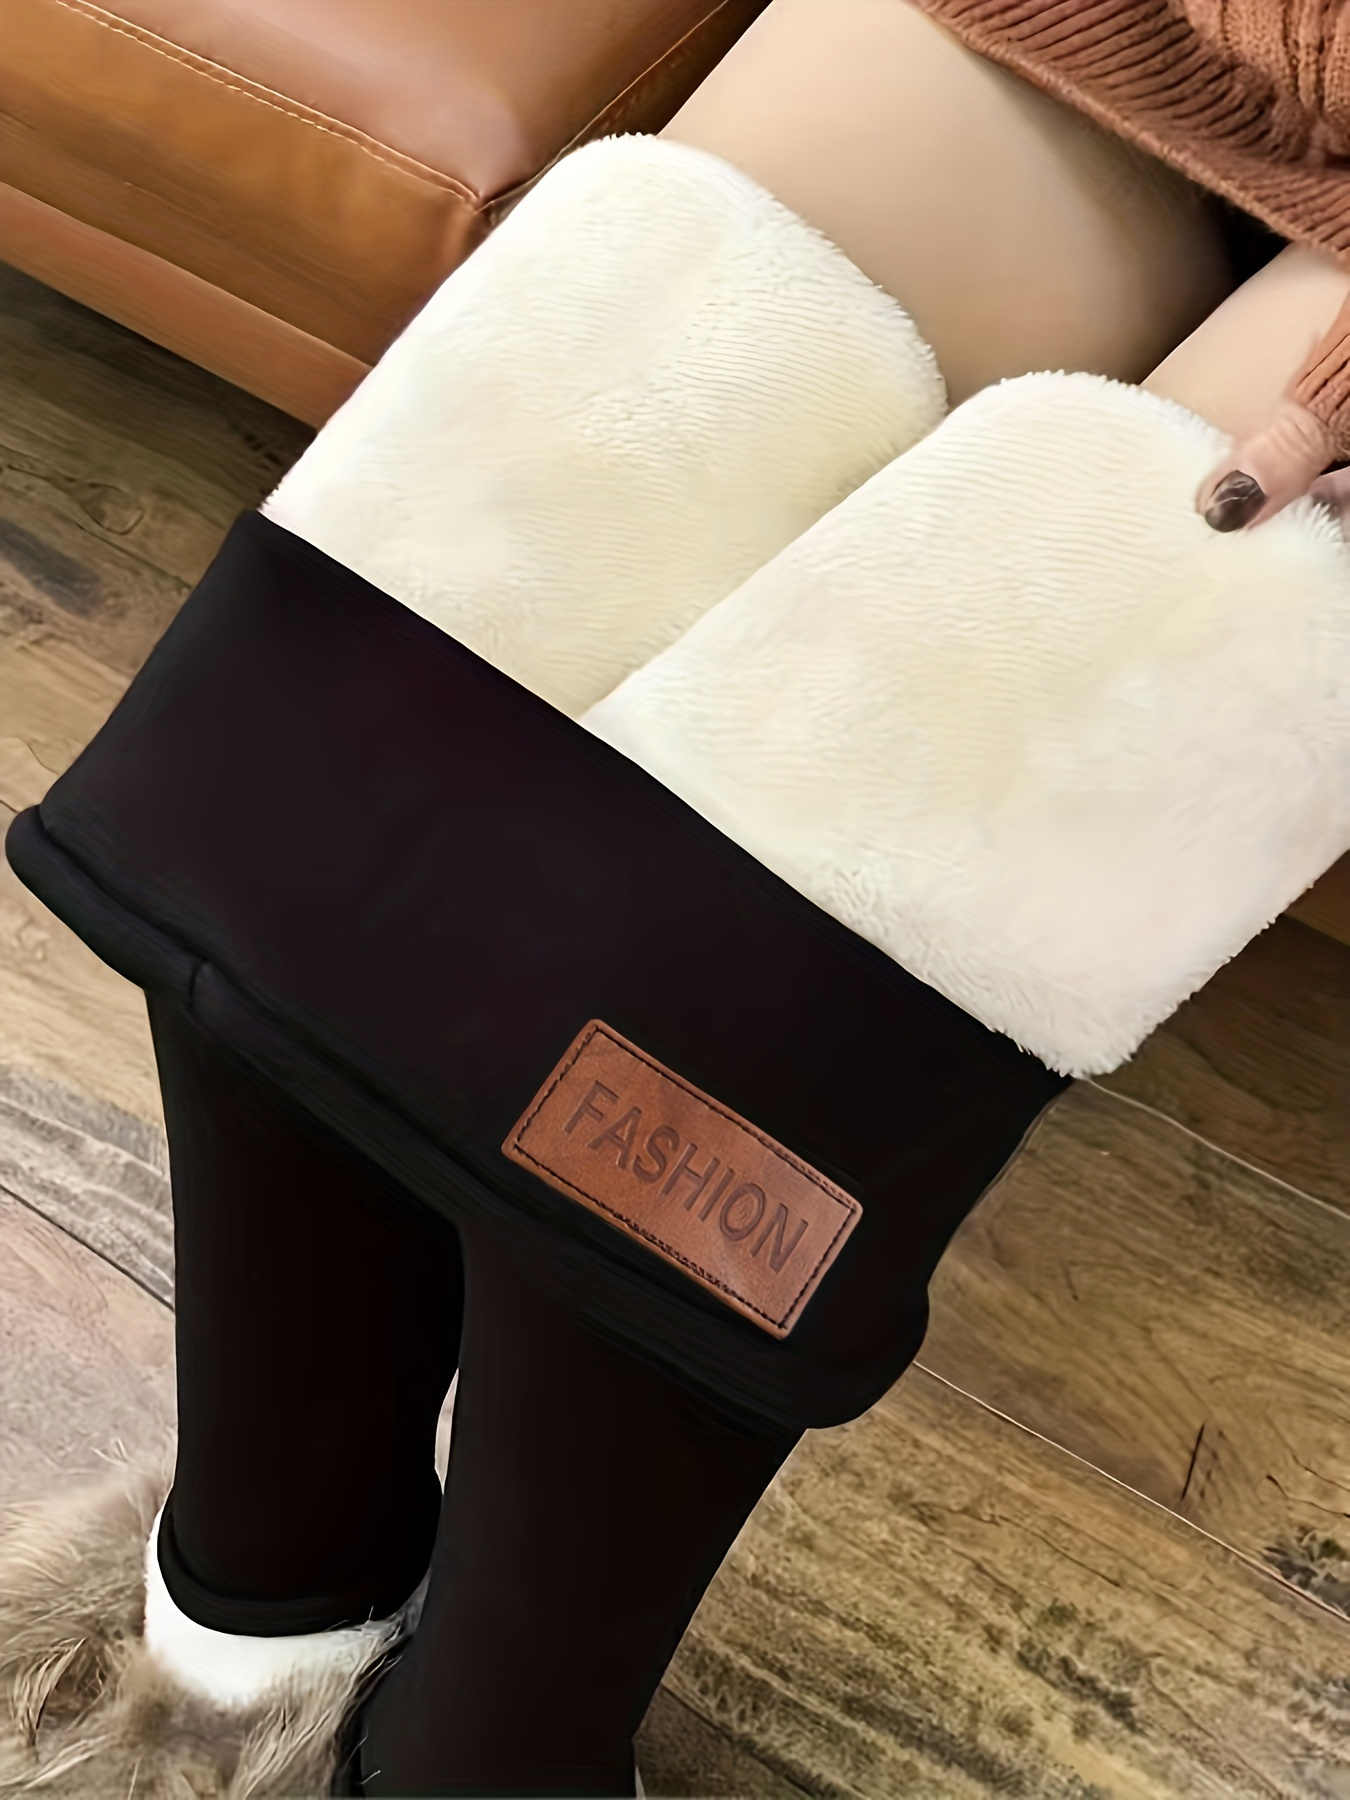 line NORMOV Winter Warm Fleece Lined Leggings for Women Thermal